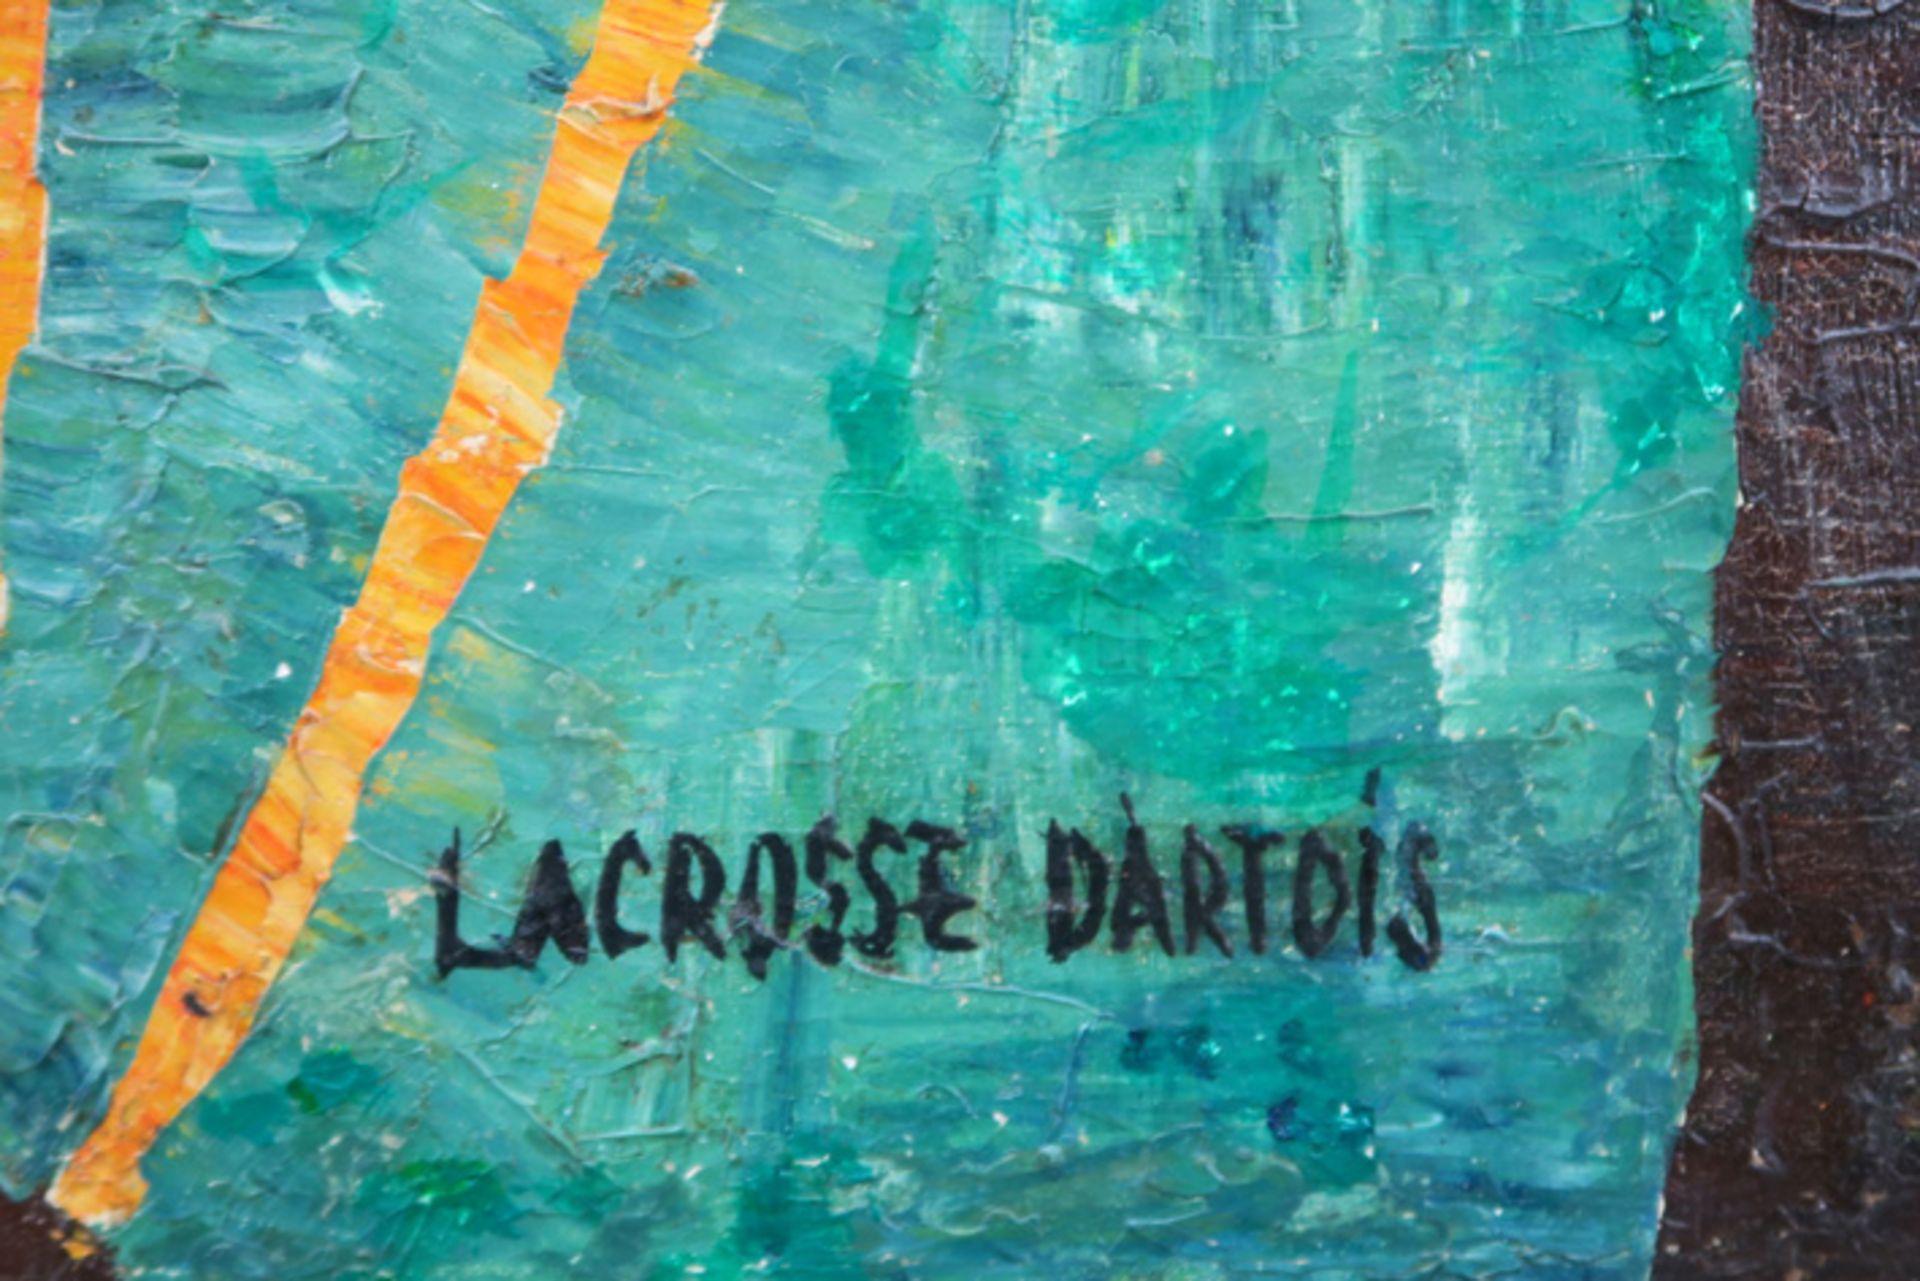 20th Cent. oil on canvas - signed Lacrosse d'Artois || LACROSSE D'ARTOIS (20° EEUW) - Image 2 of 4